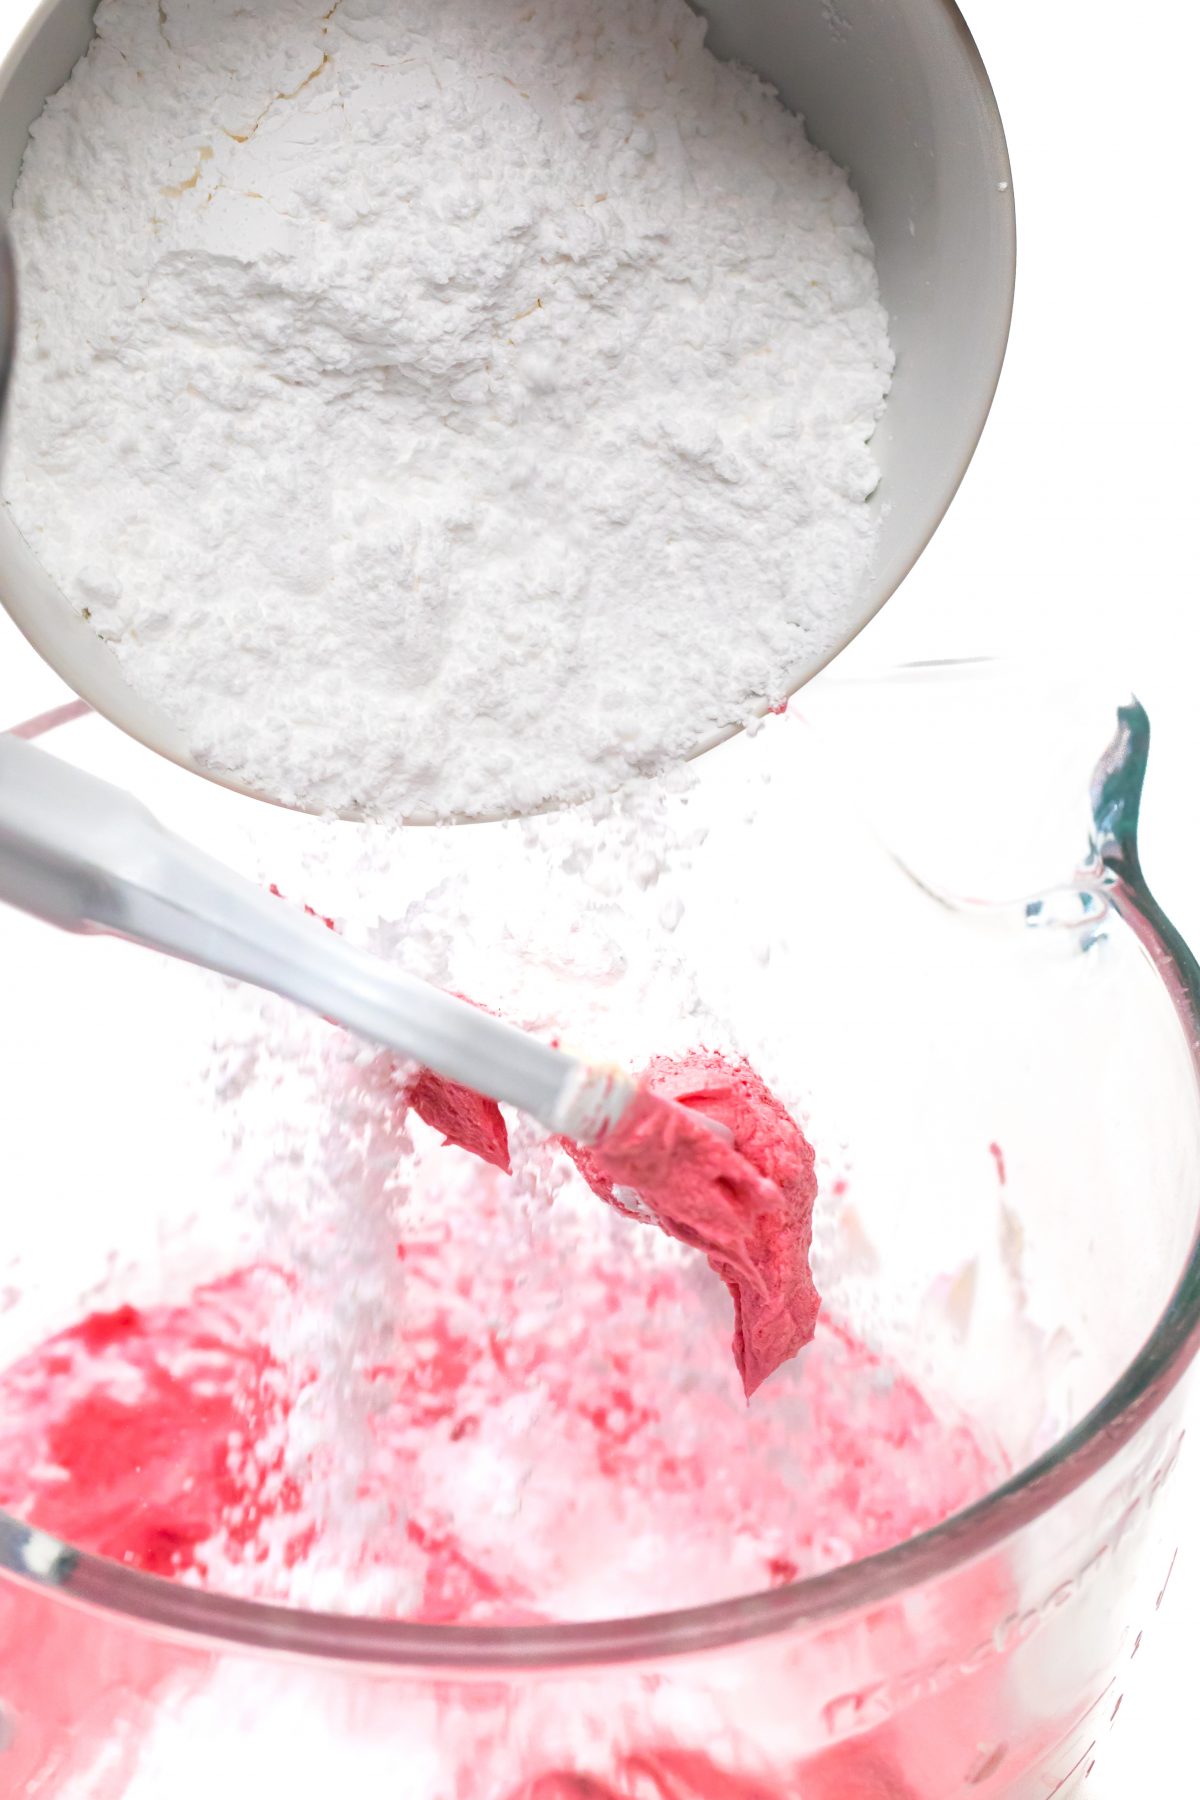 Mix powdered sugar to bowl